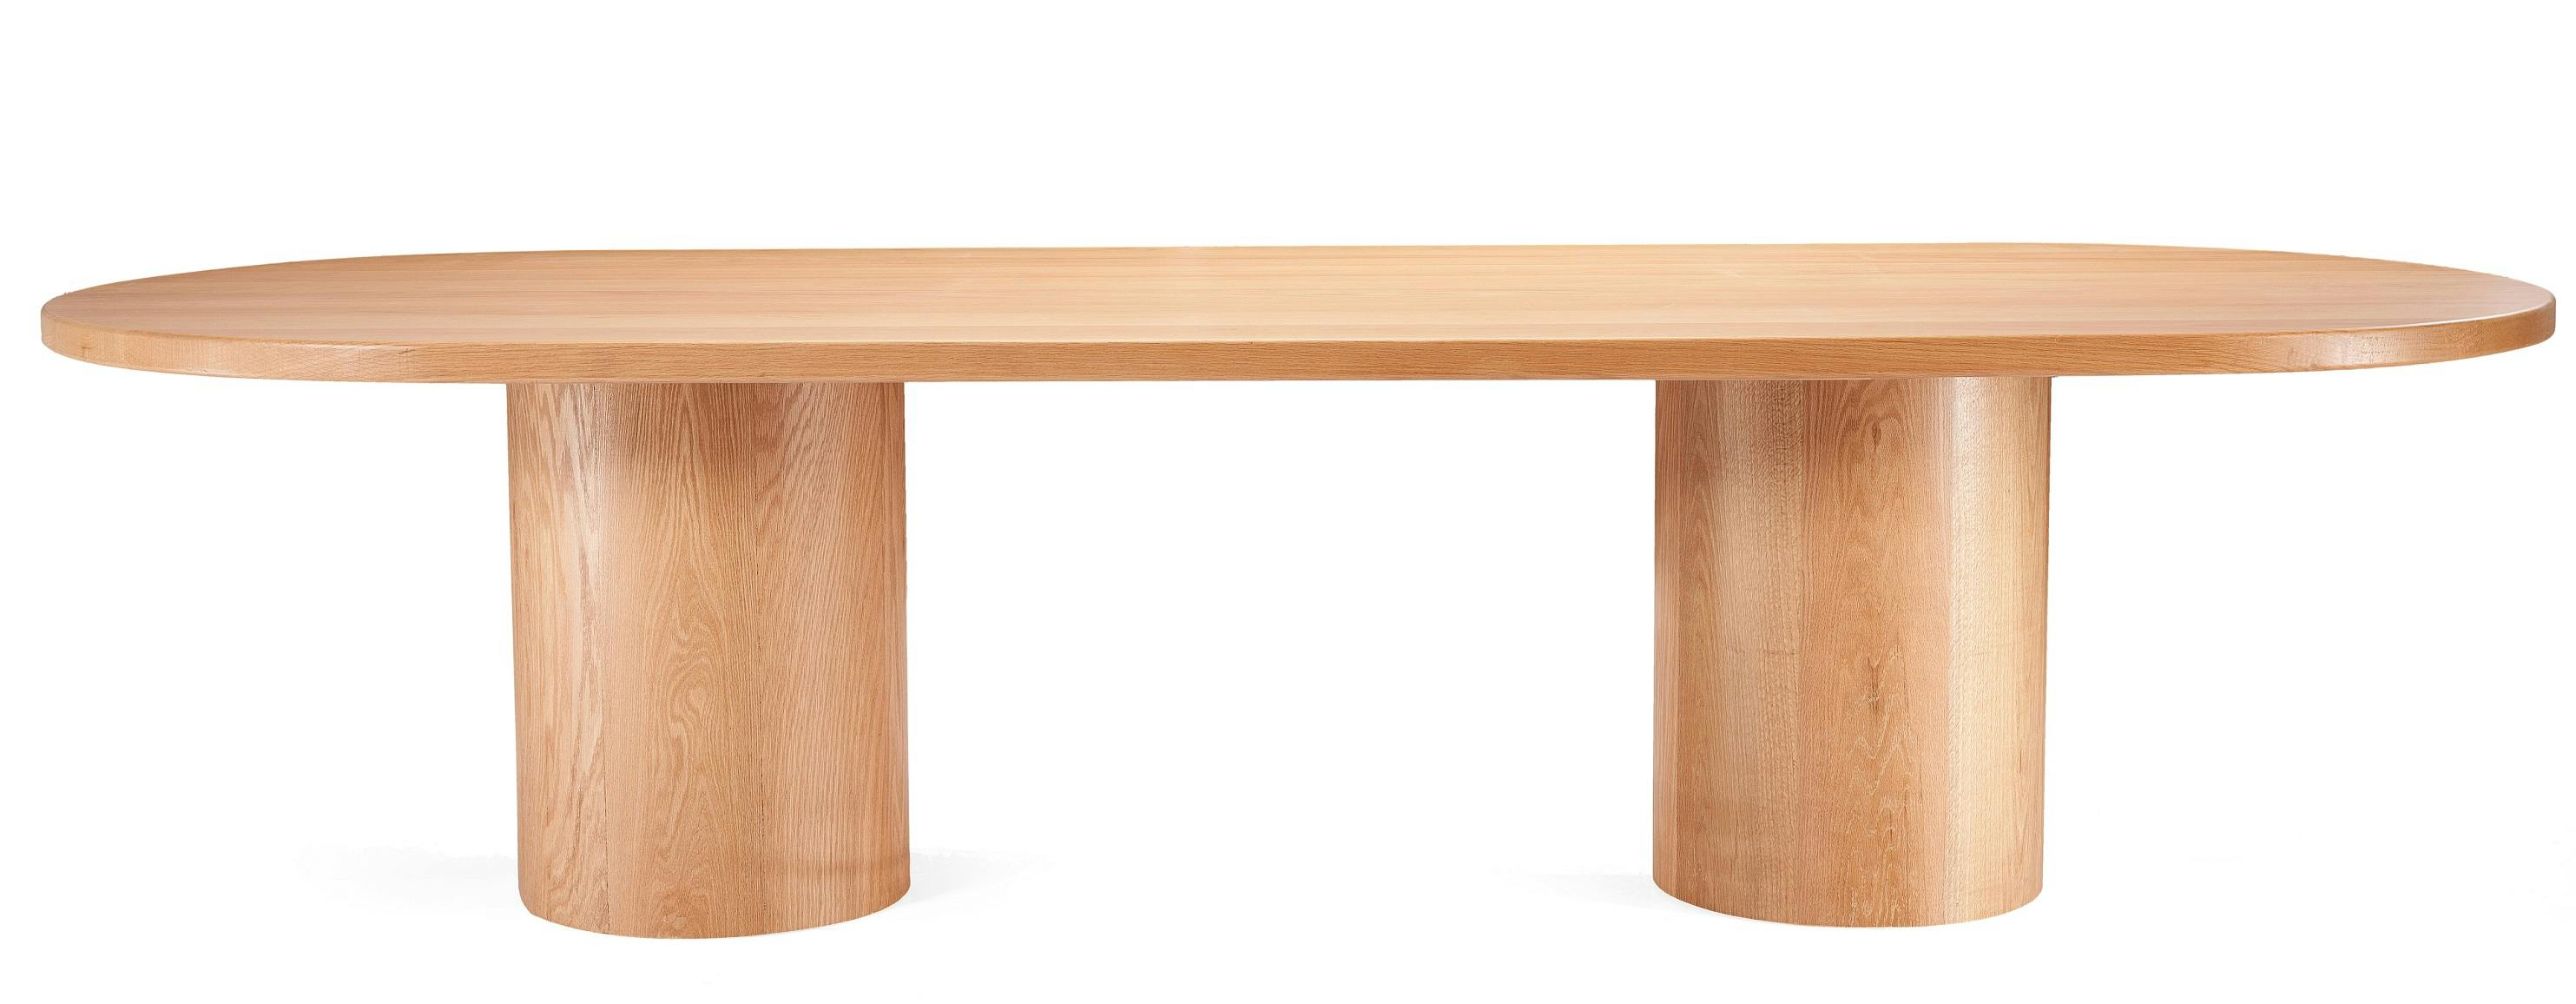 Oval Dining Table in Oak Wood 0